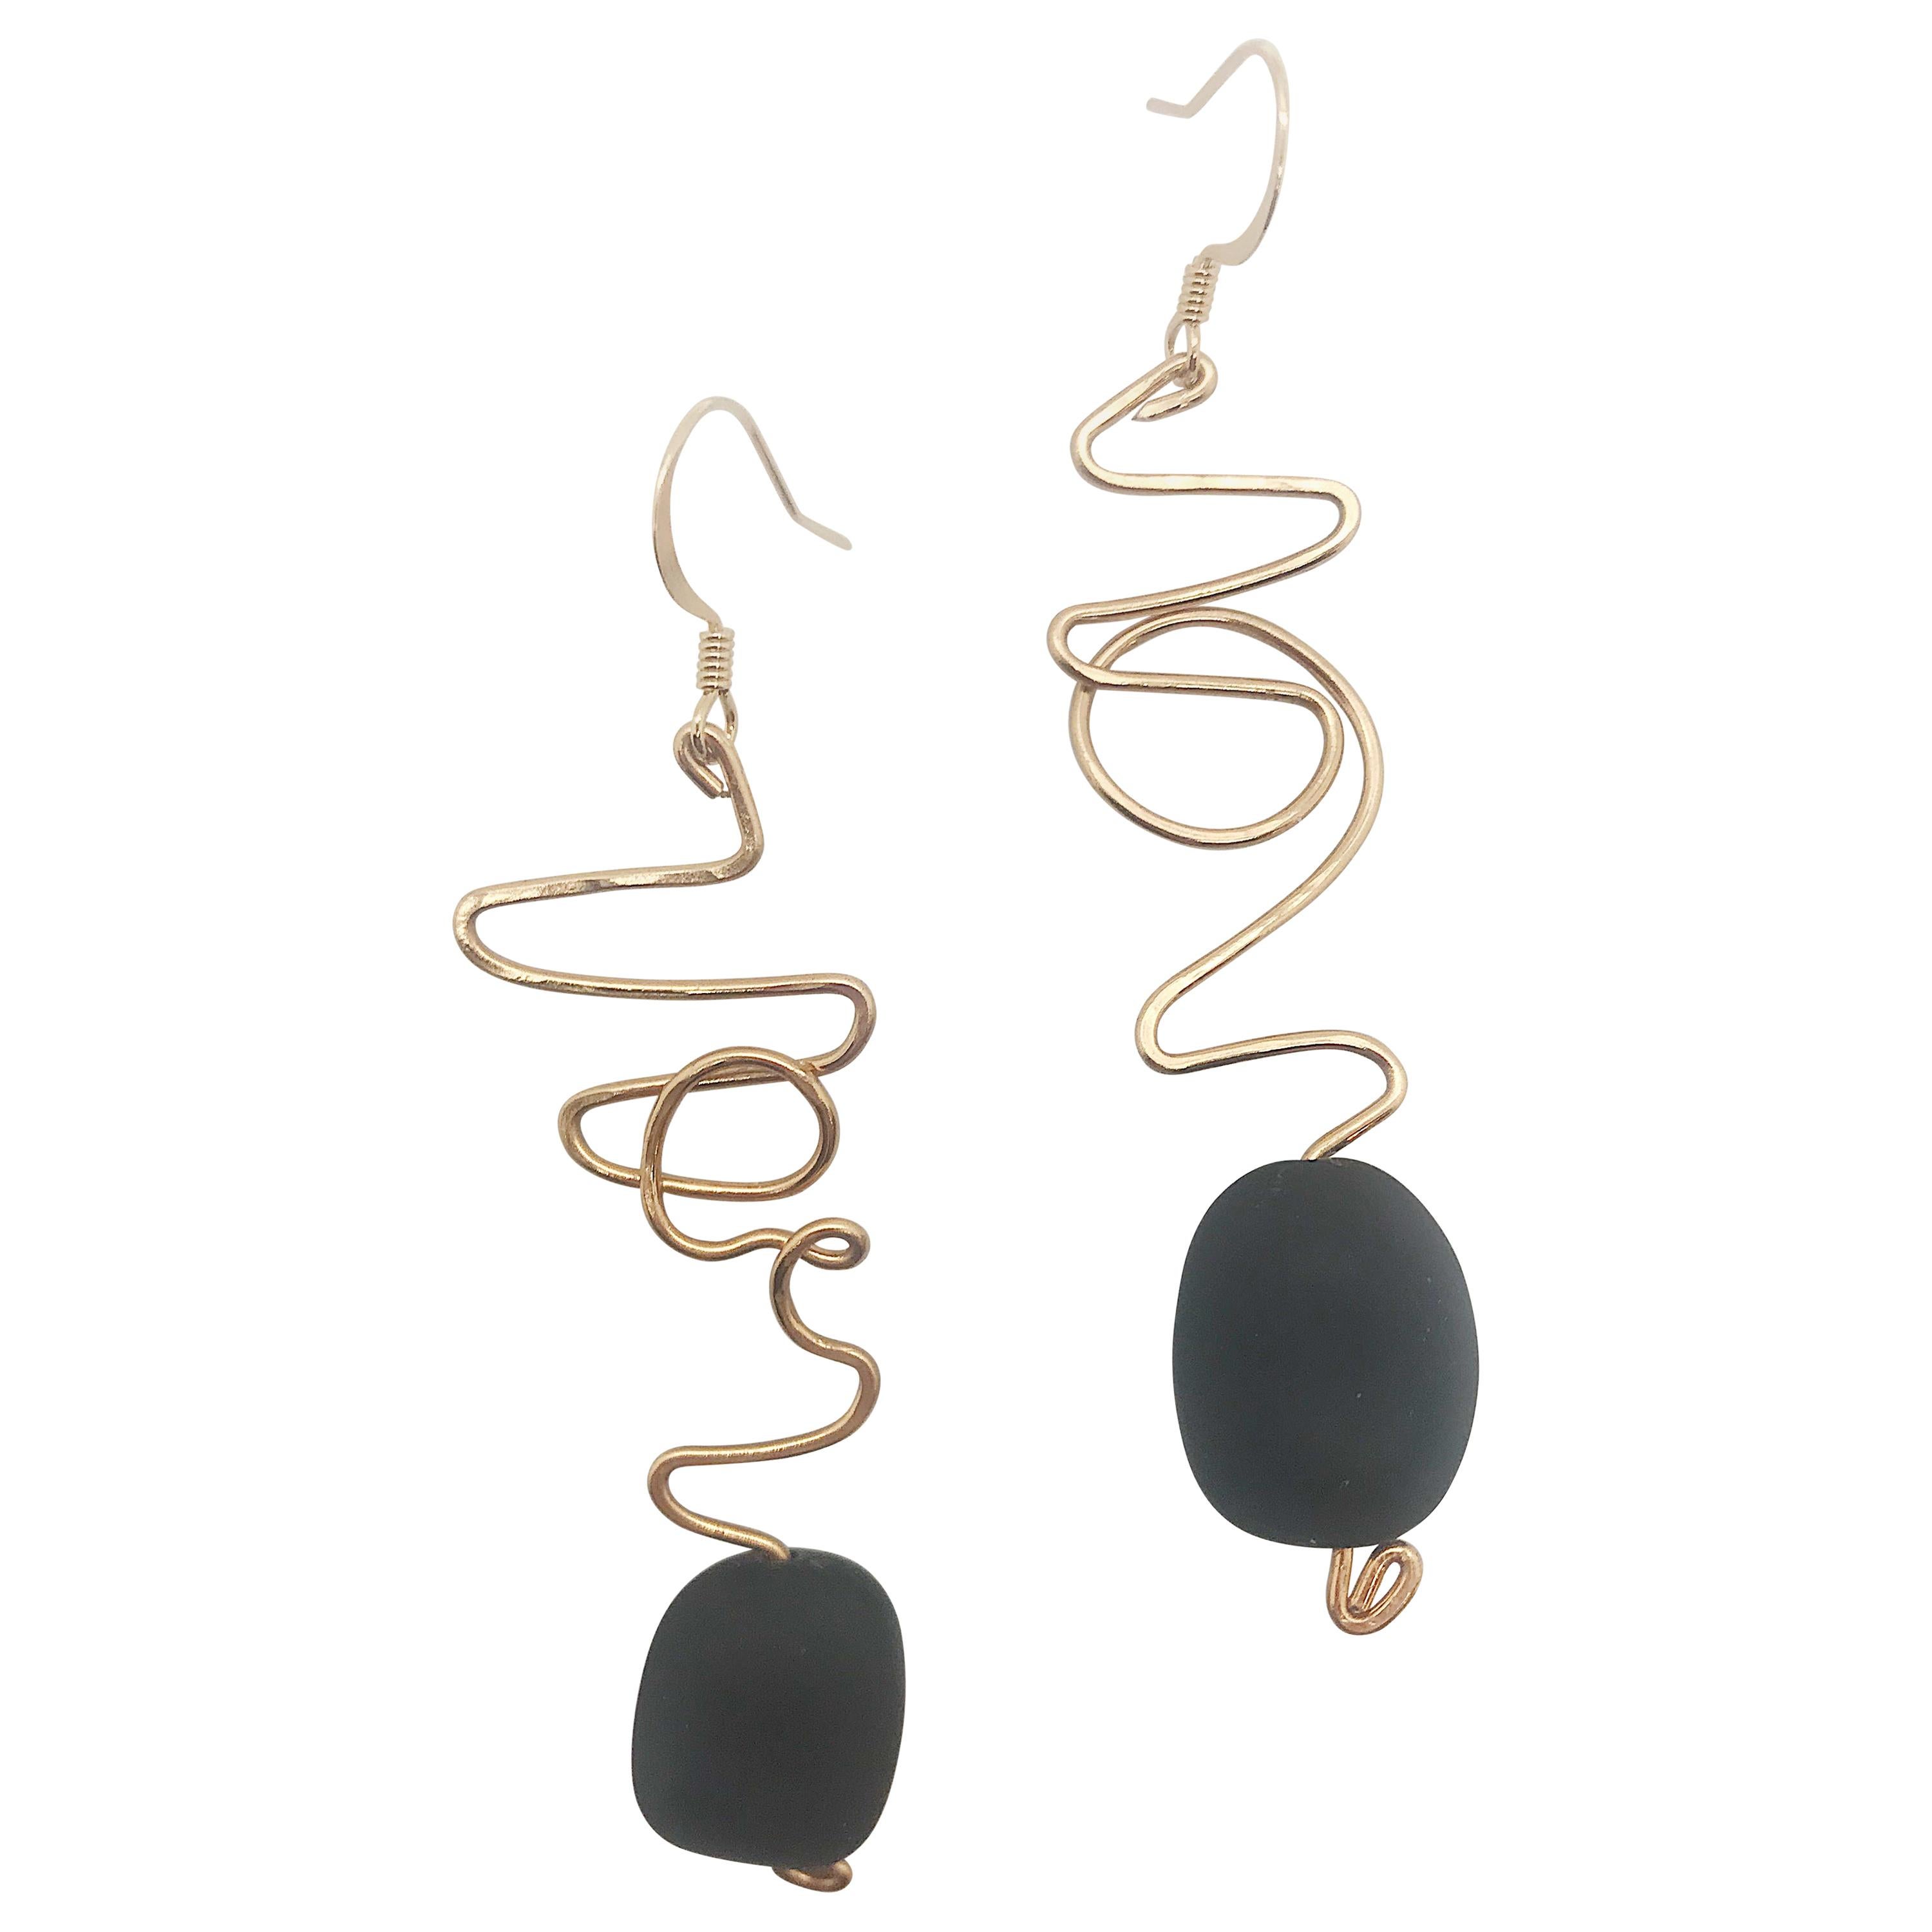 Eclipse Earrings featuring matte black seas glass by Sidney Cherie Studio.  For Sale